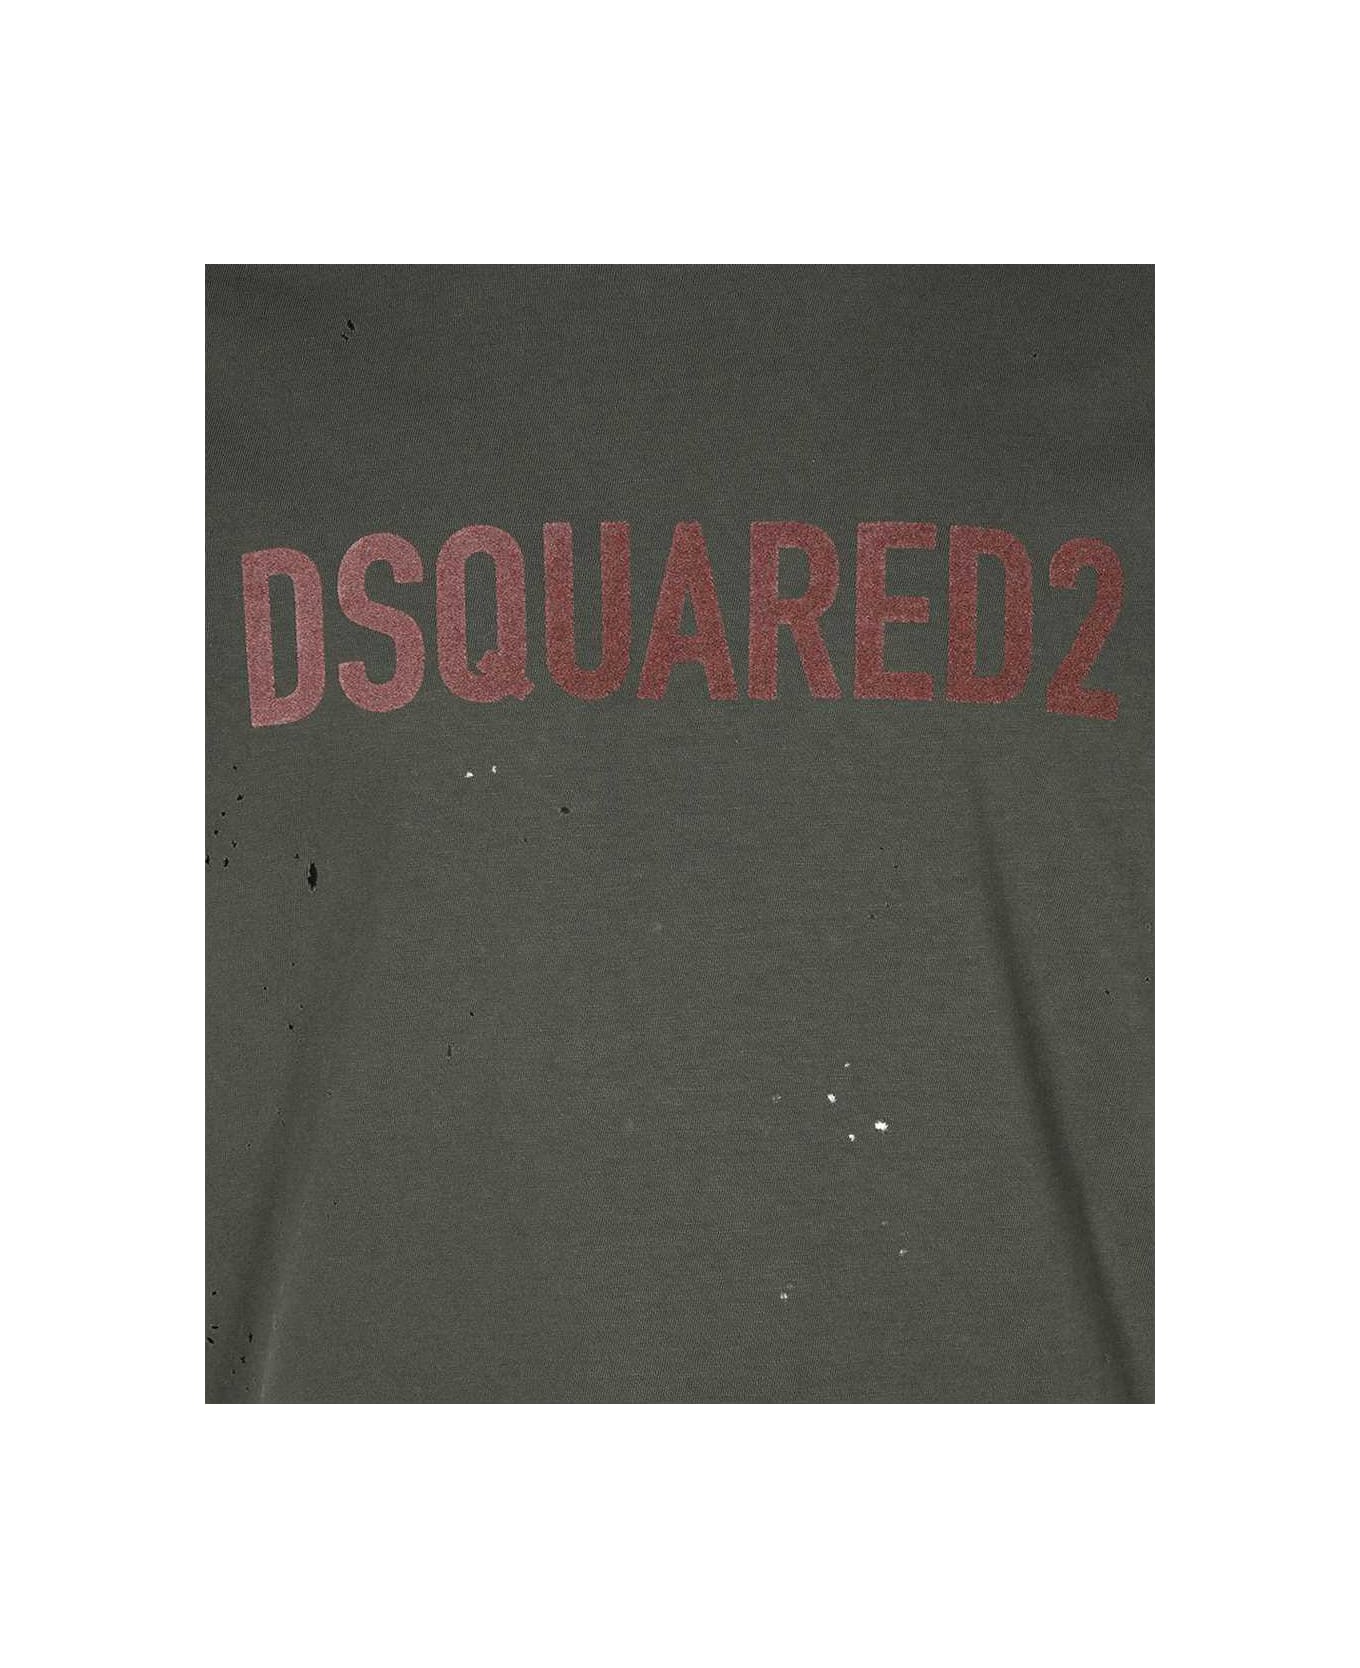 Dsquared2 Logo Cotton T-shirt - green シャツ